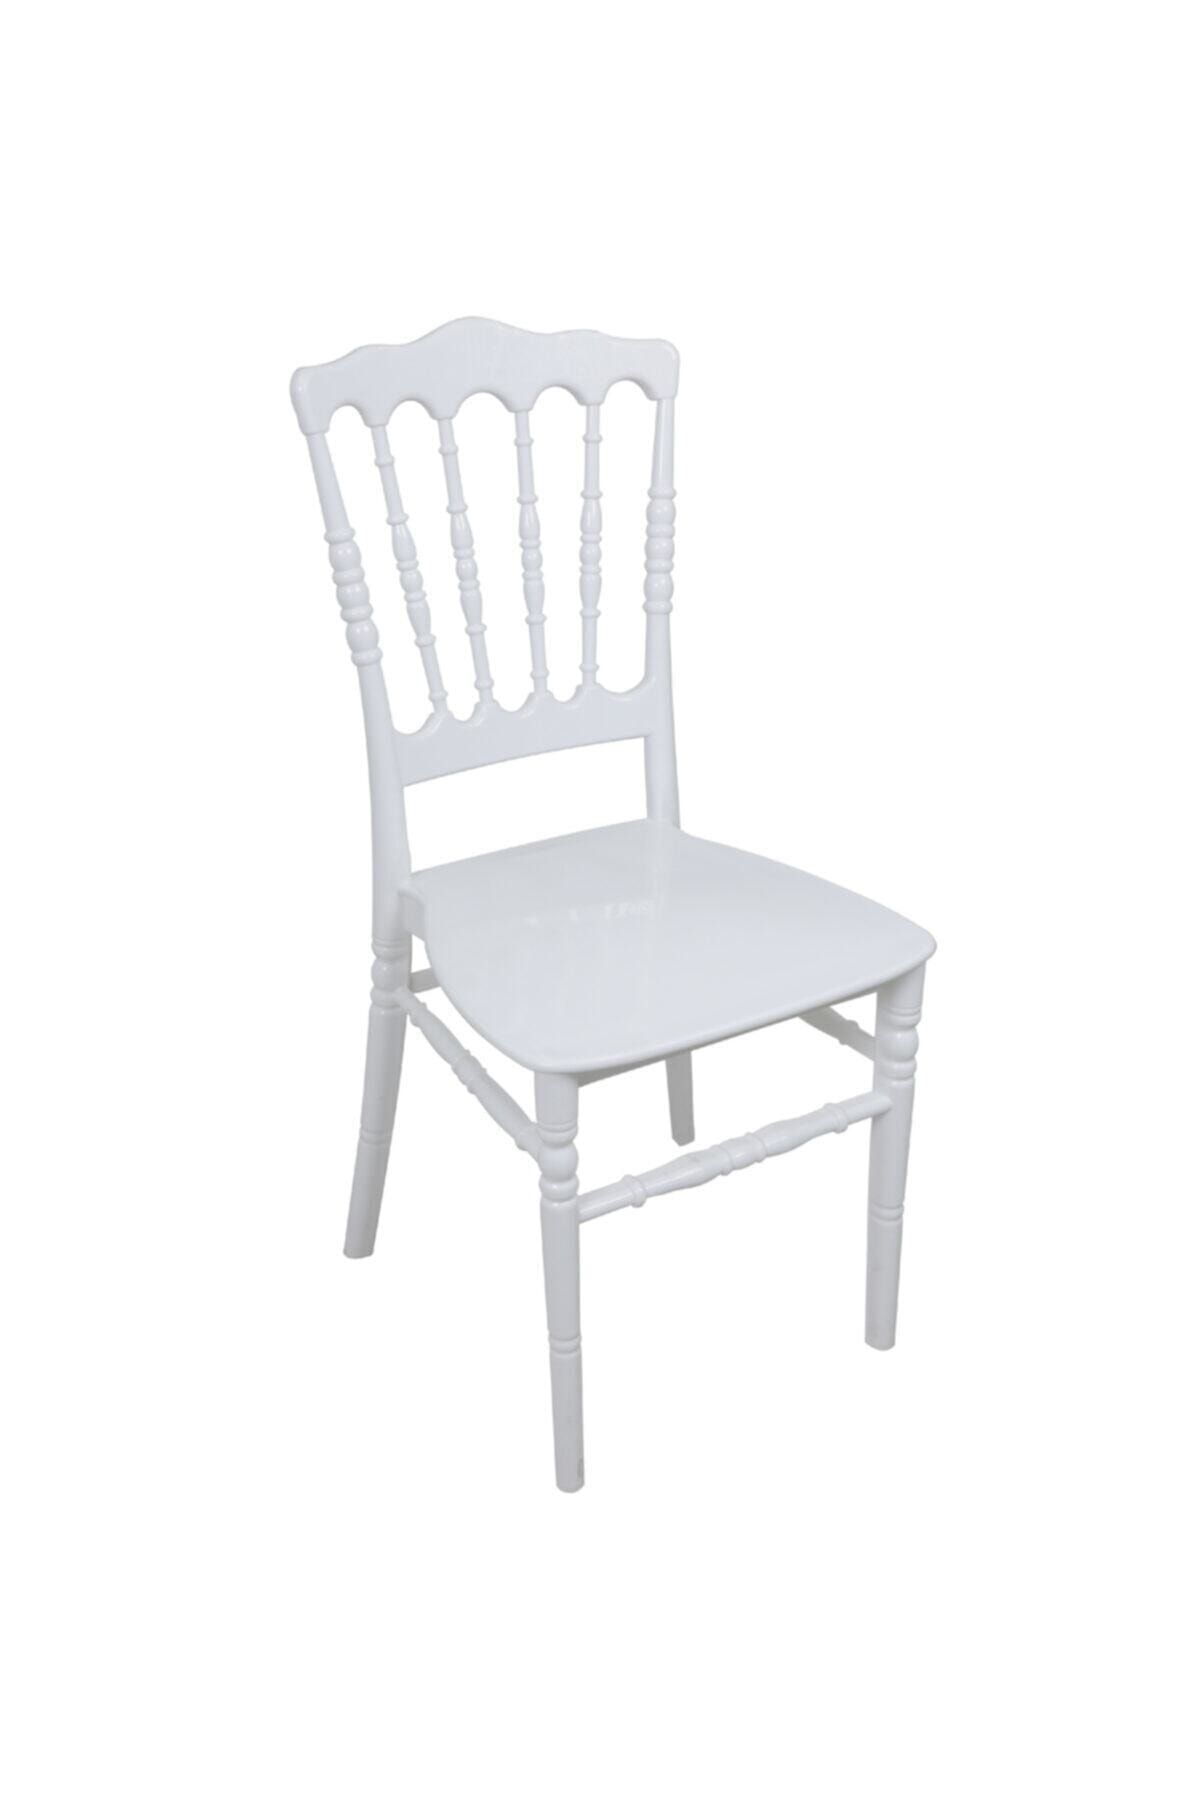 Mandella Silver Sandalye Napolyon Beyaz - 1 Adet